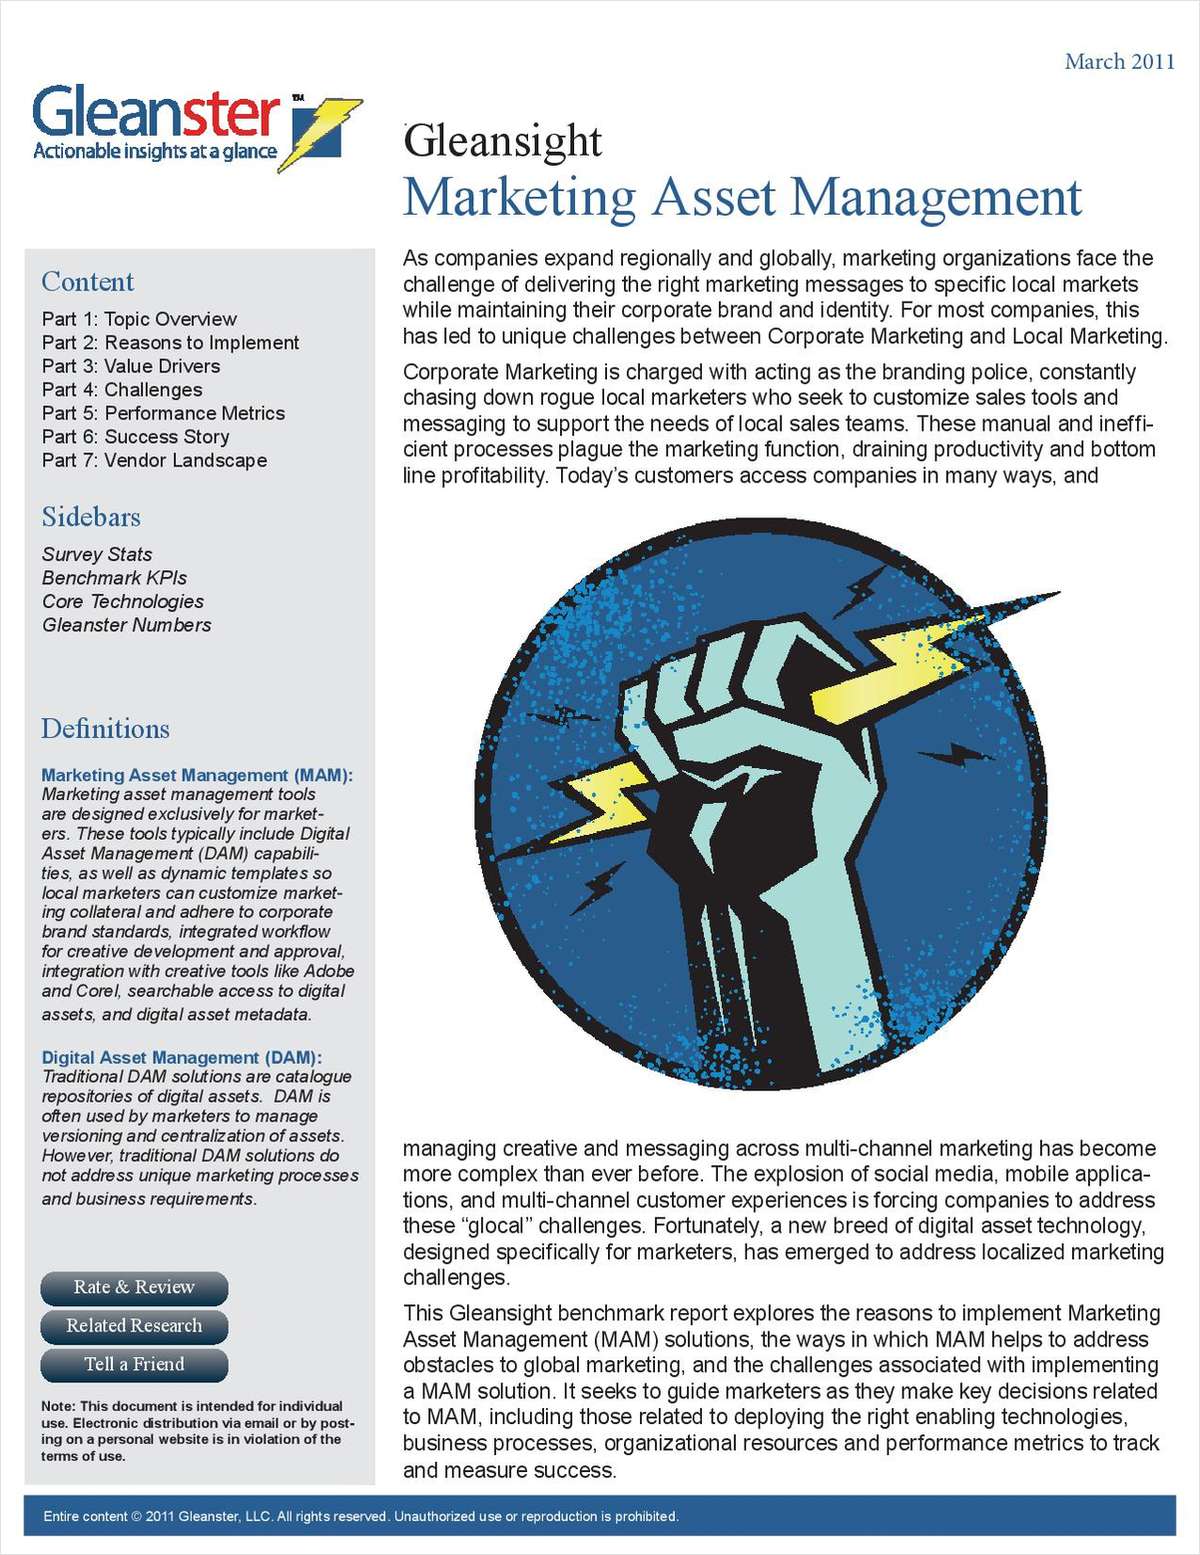 Marketing Asset Management Best Practices Benchmark Report